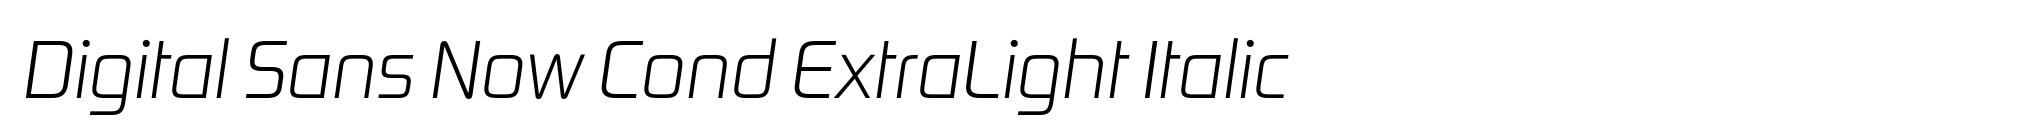 Digital Sans Now Cond ExtraLight Italic image